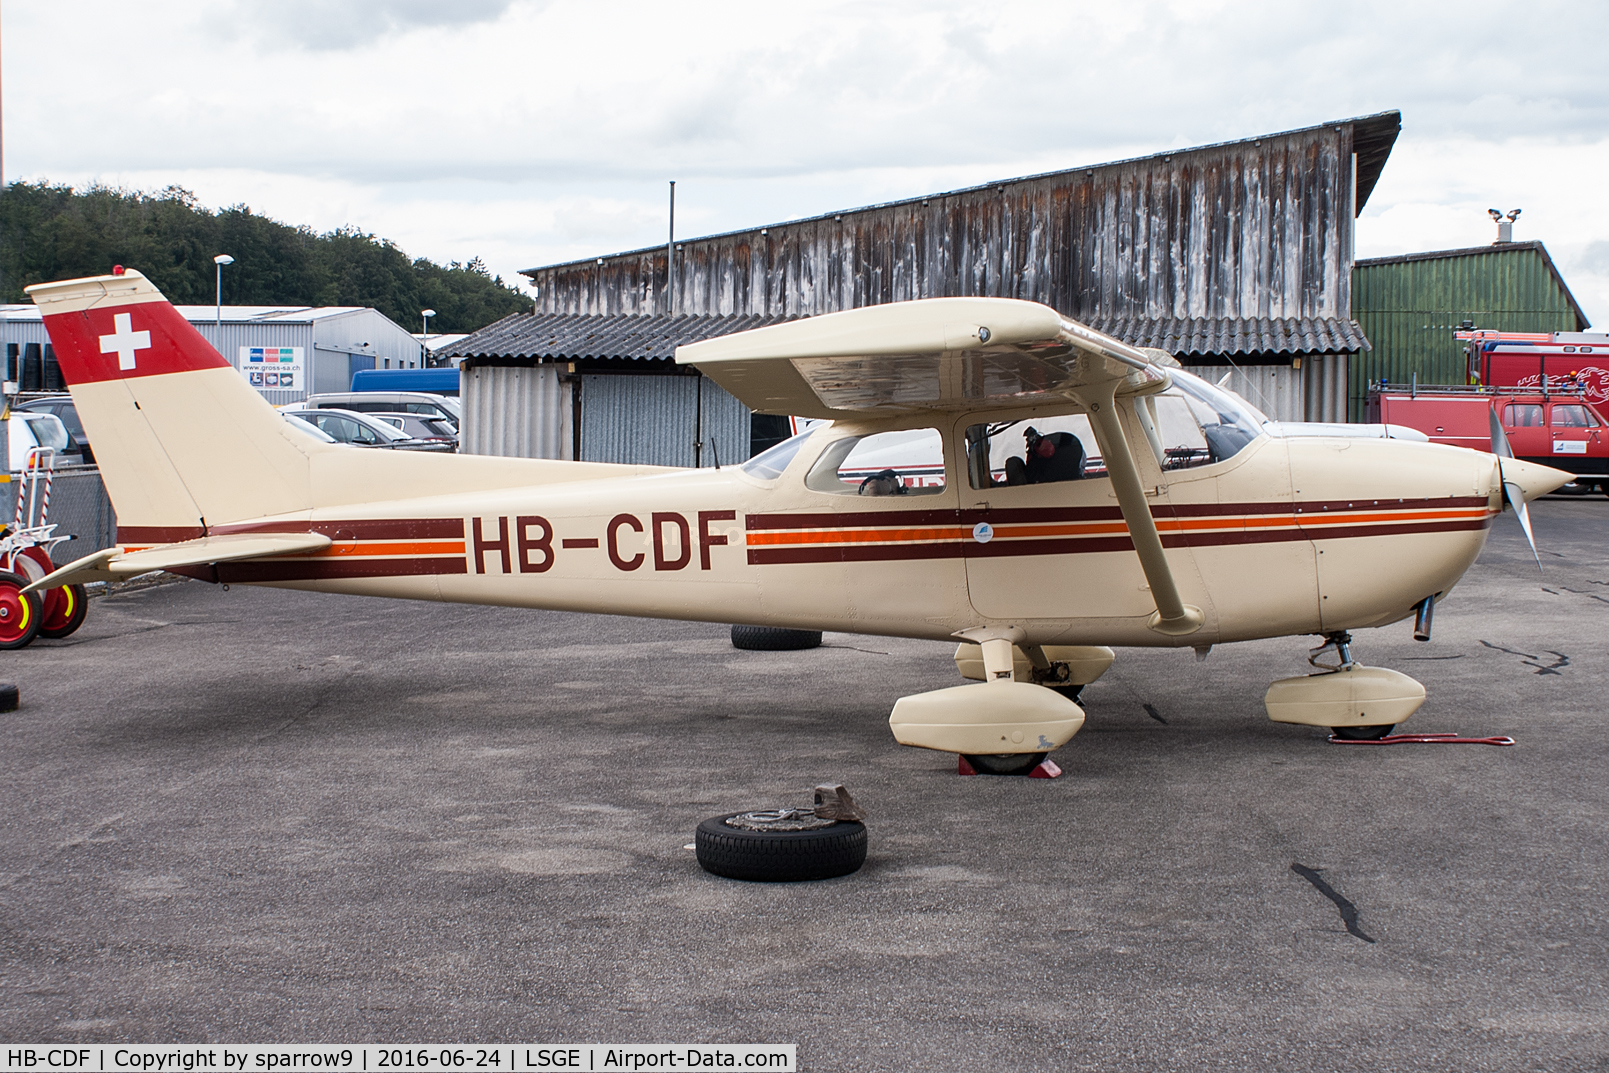 HB-CDF, 1972 Reims F172M Skyhawk C/N 0926, at Ecuvillens airport during RIO2016